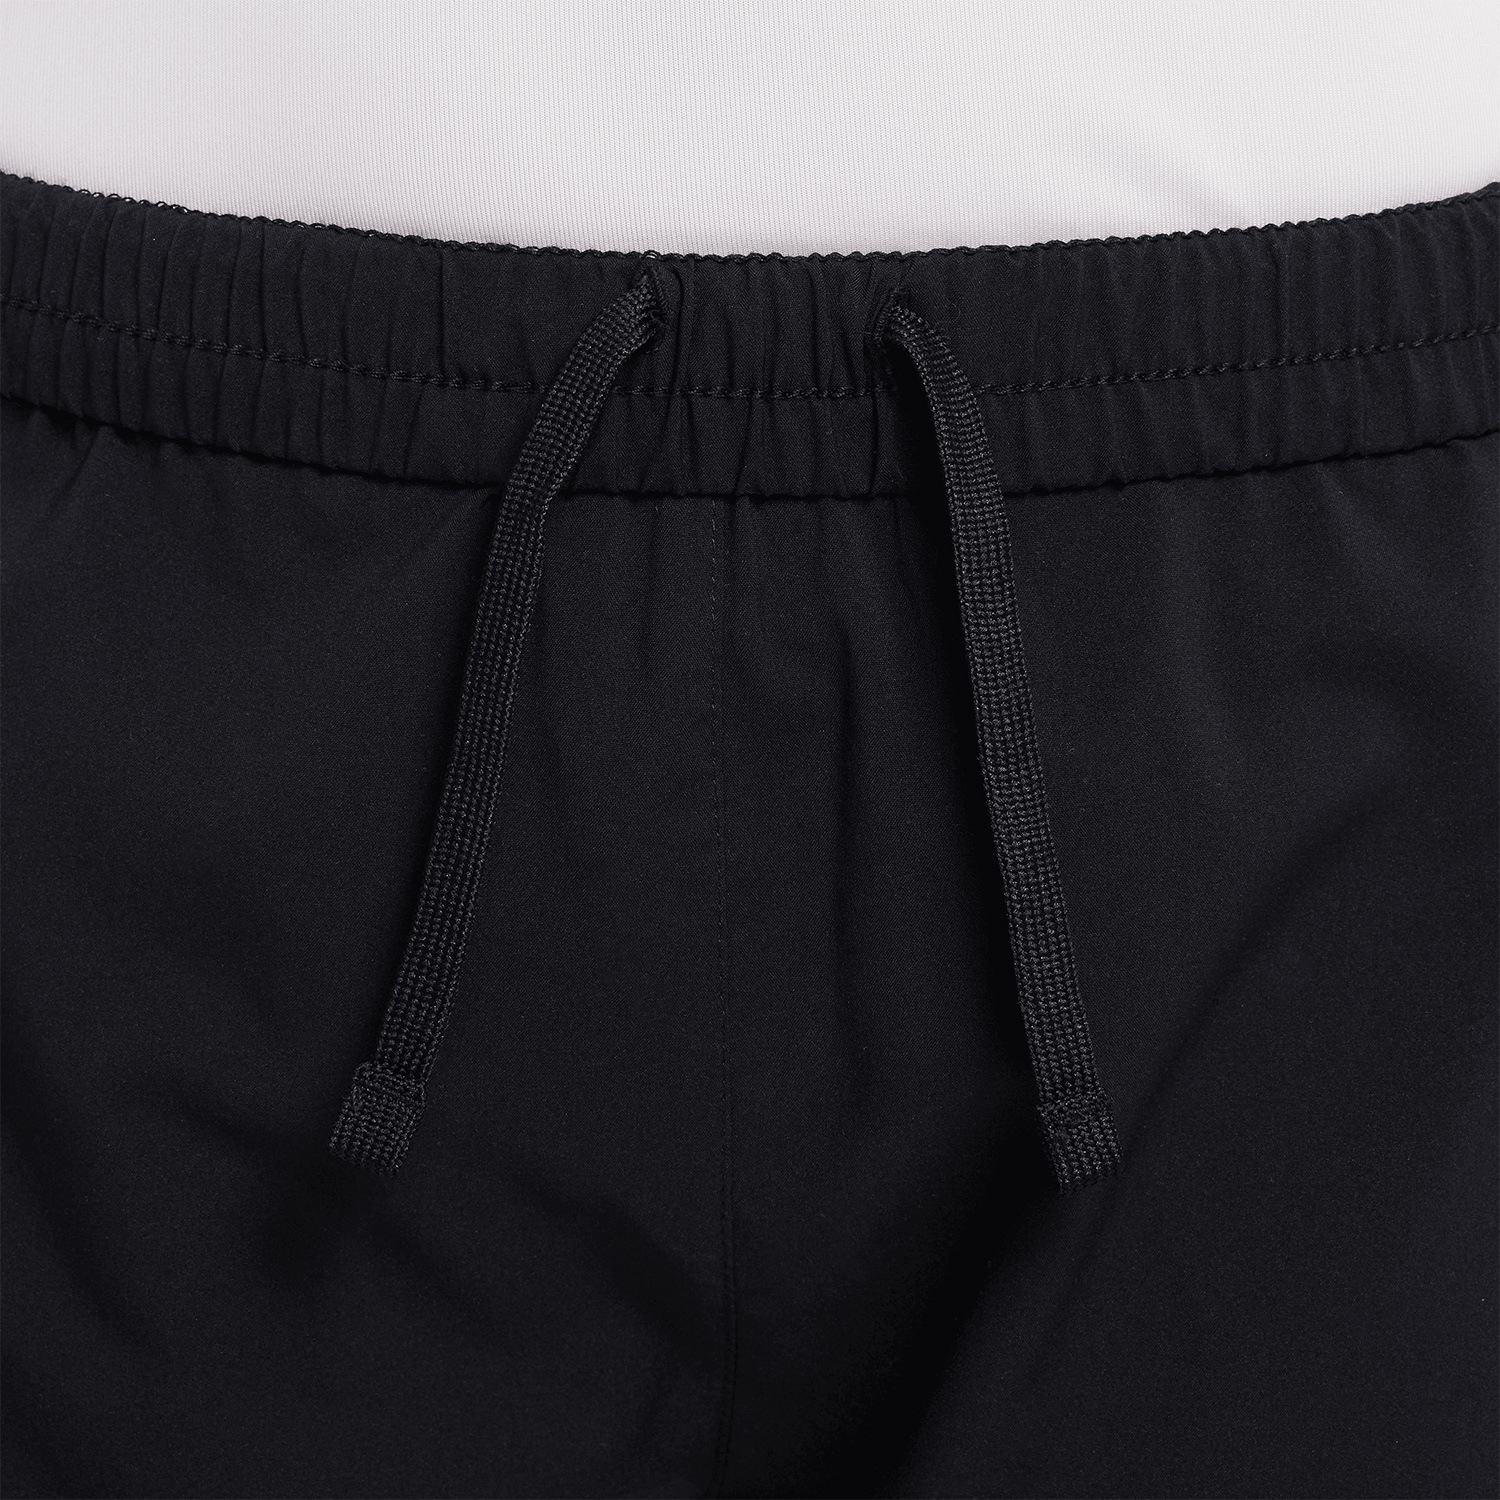 Nike Dri-FIT One 3in Shorts Girl - Black/White